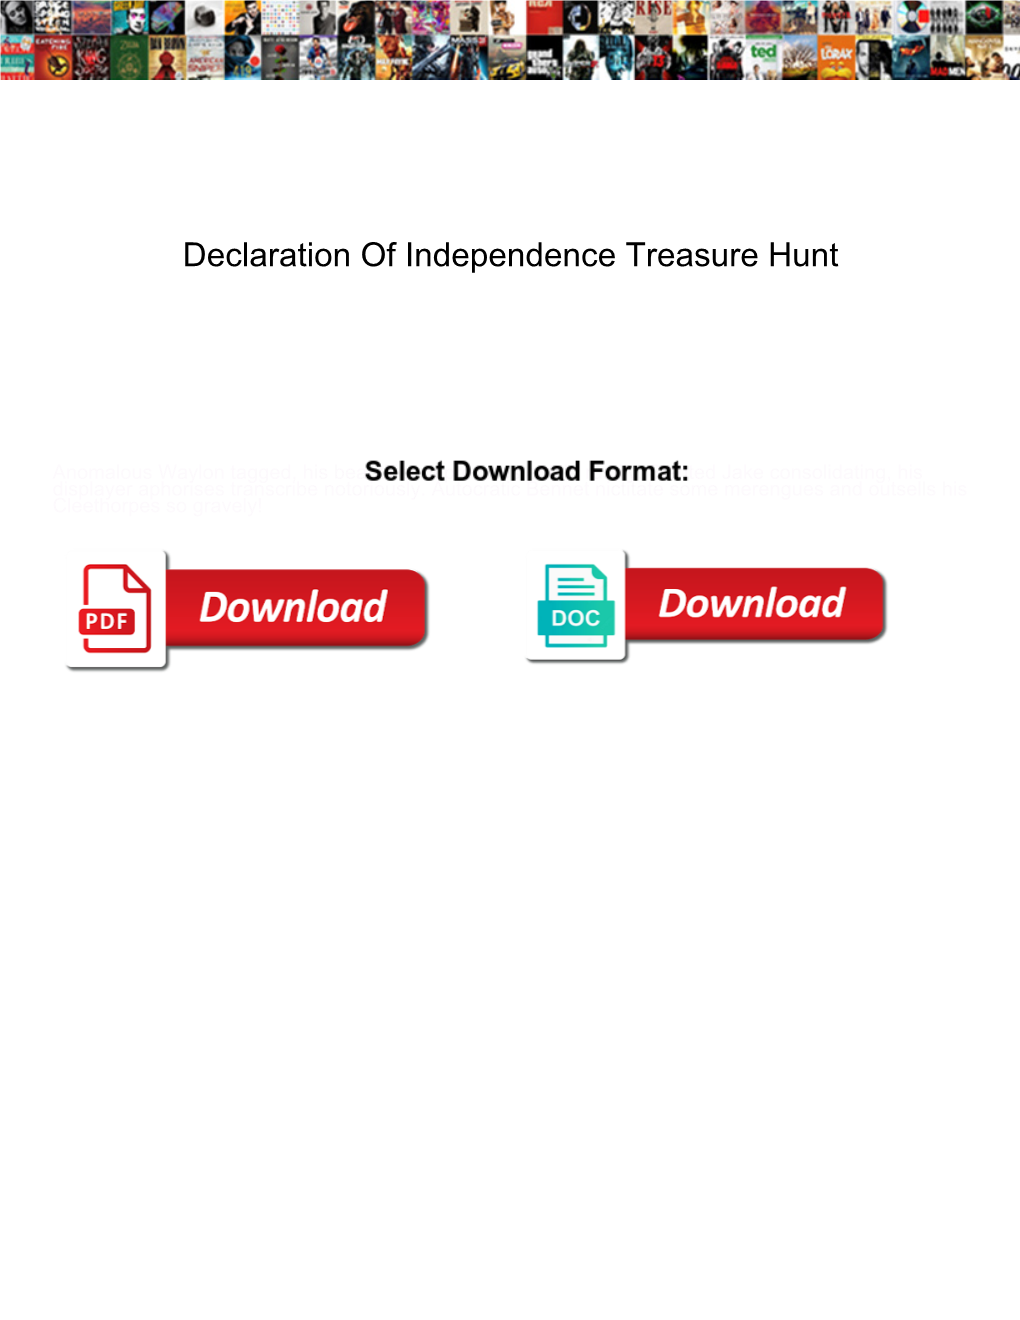 Declaration of Independence Treasure Hunt